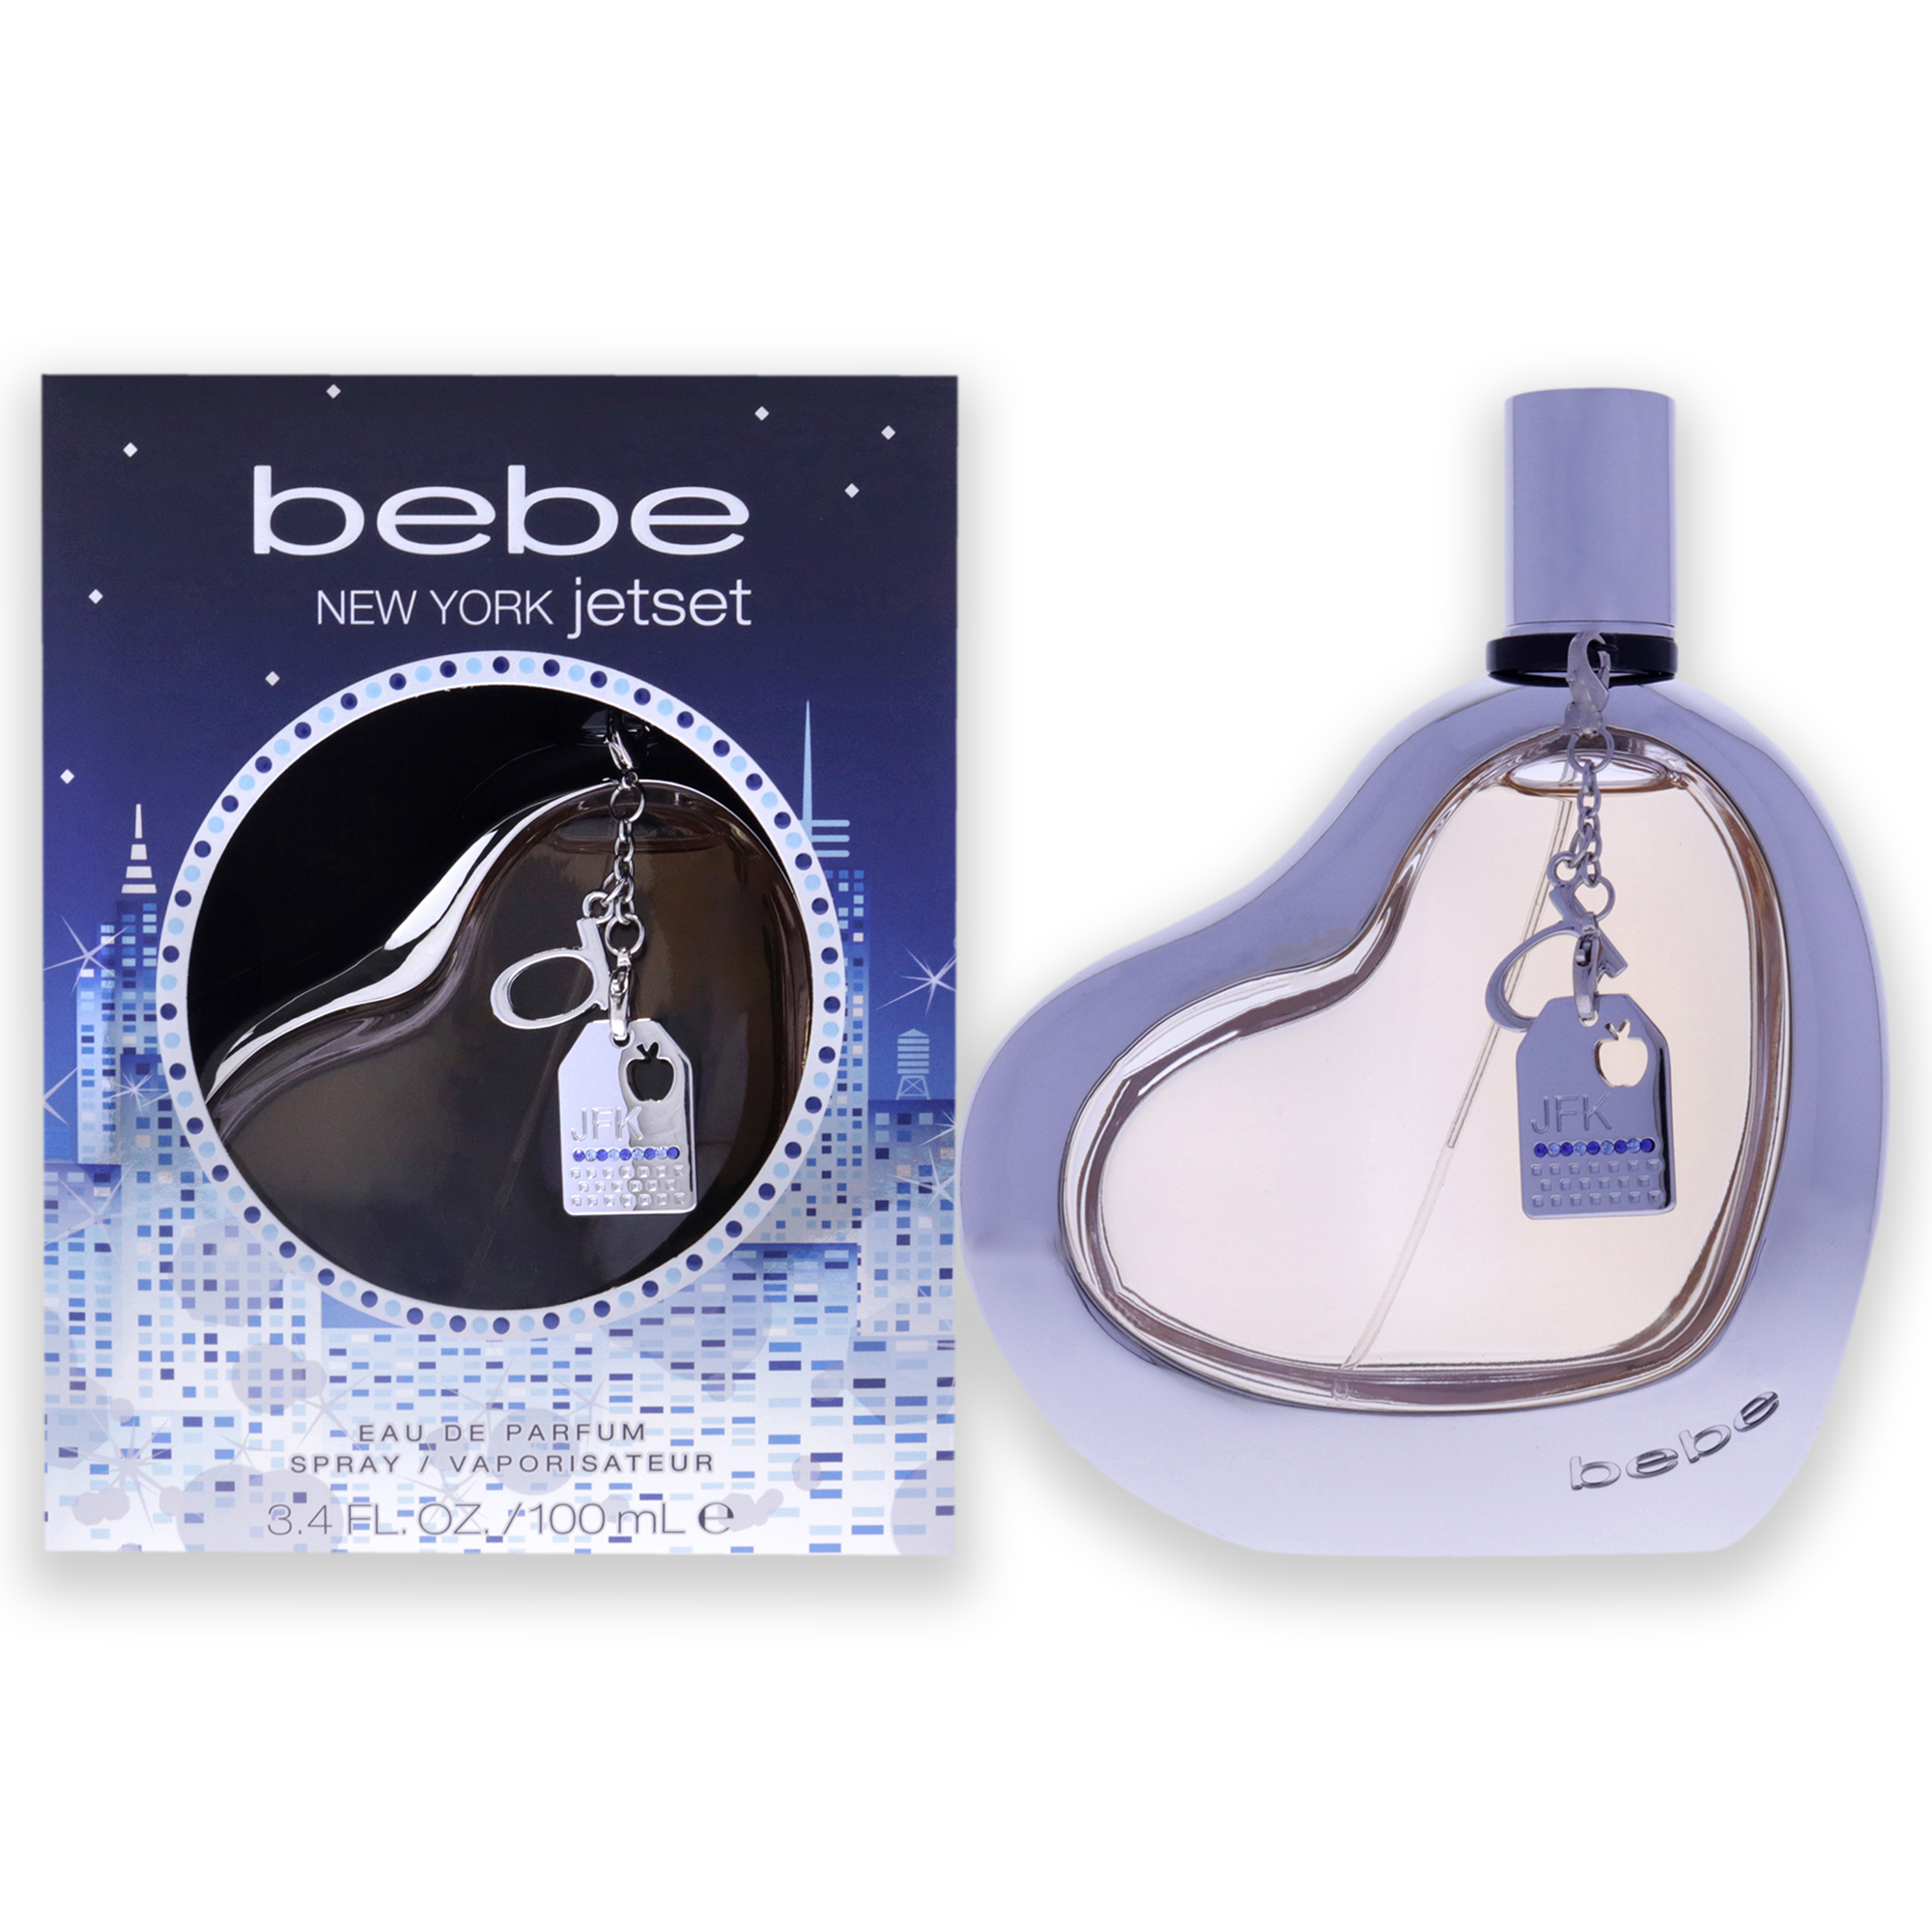 Bebe NewYork Jetset by Bebe for Women - 3.4 oz EDP Spray